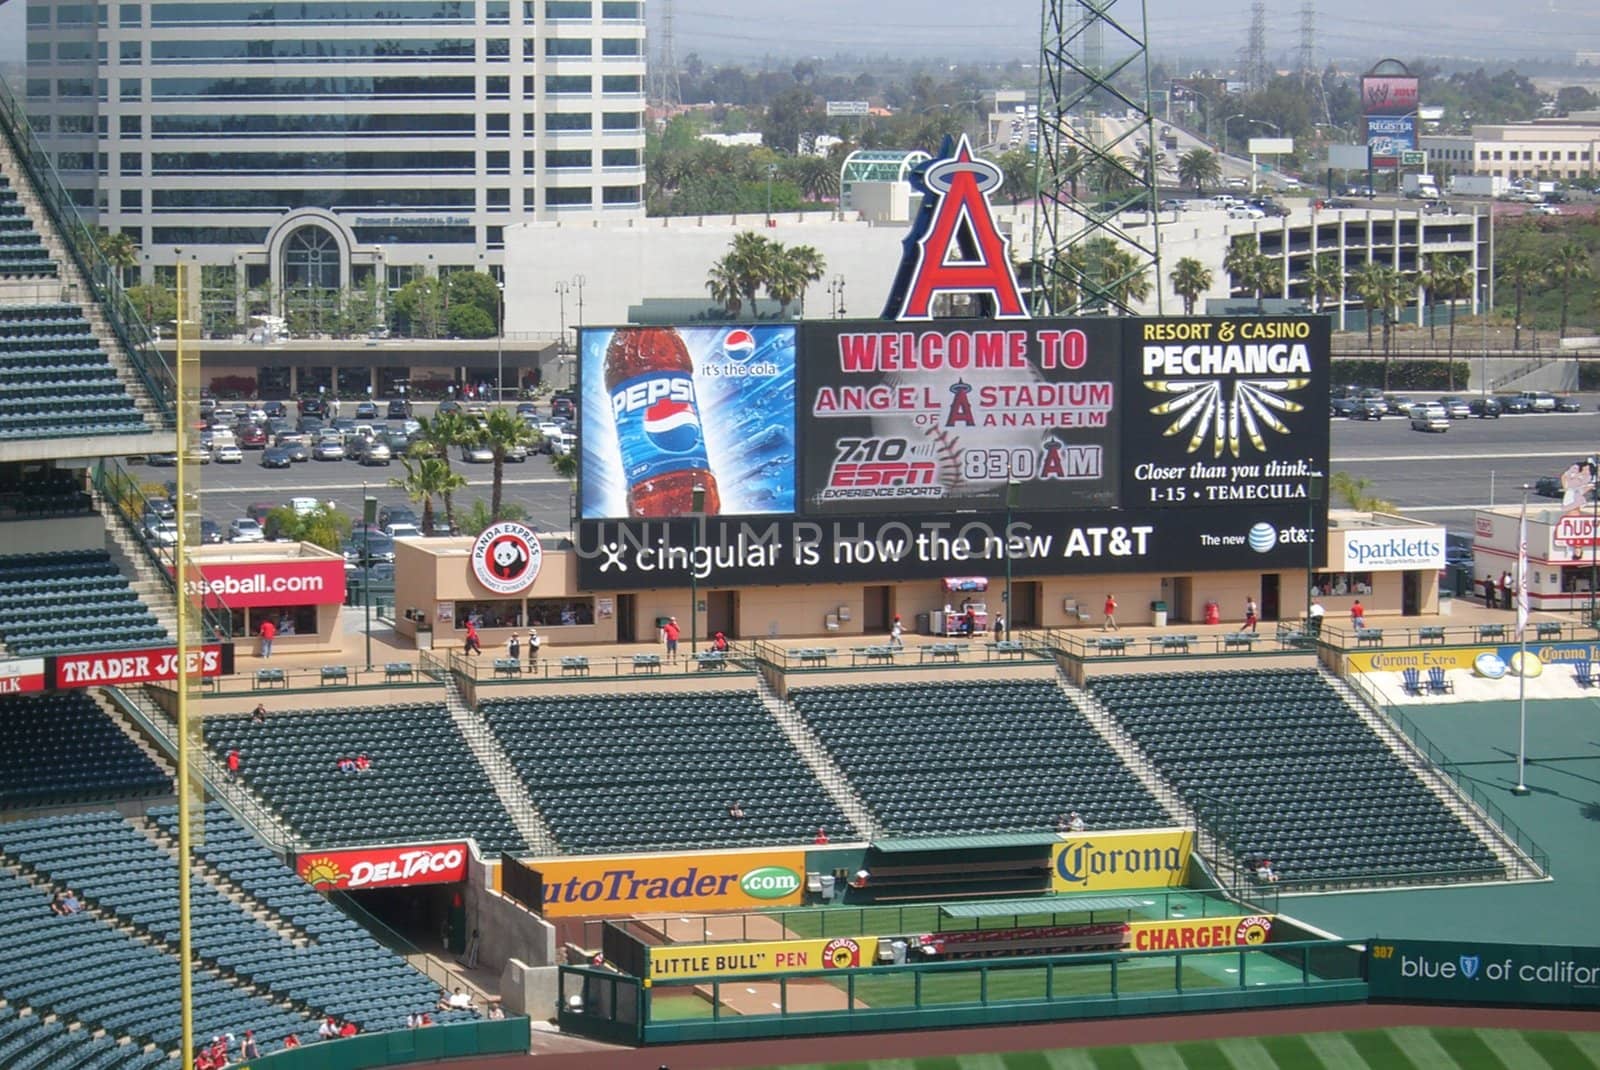 Famous big "A" scoreboard of the Angels baseball team in California.